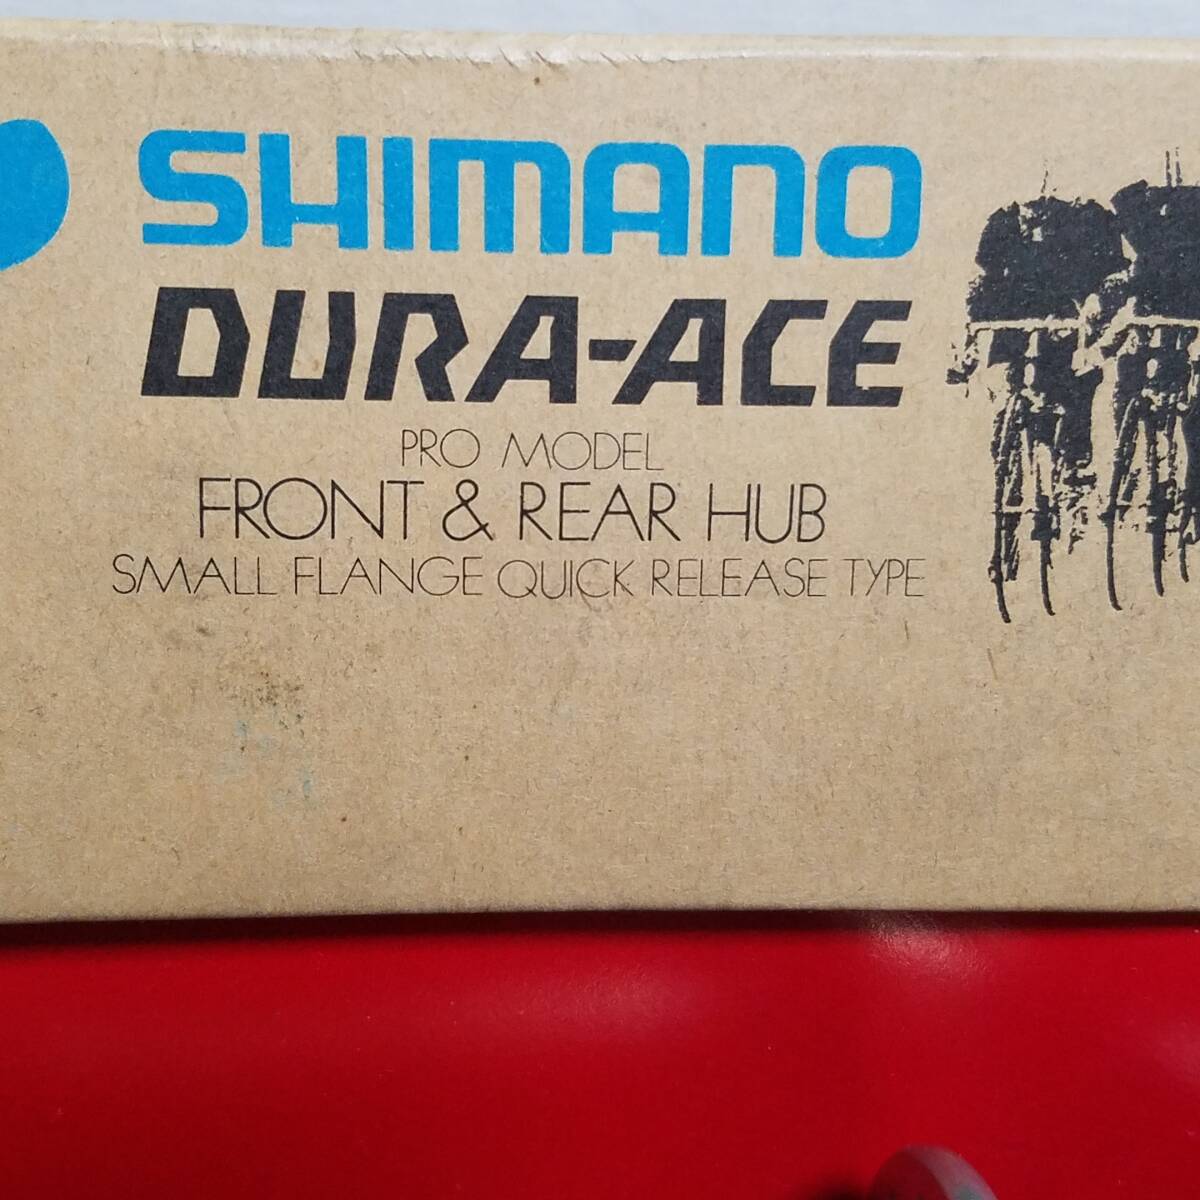 SHIMANO DURA-ACE PRO MODEL TRACK HUB 前後セット 36H (S) BIA「 シマノ デュラエース ピスト ハブ」箱入り 未使用品 New Old Stock (NOS)の画像4